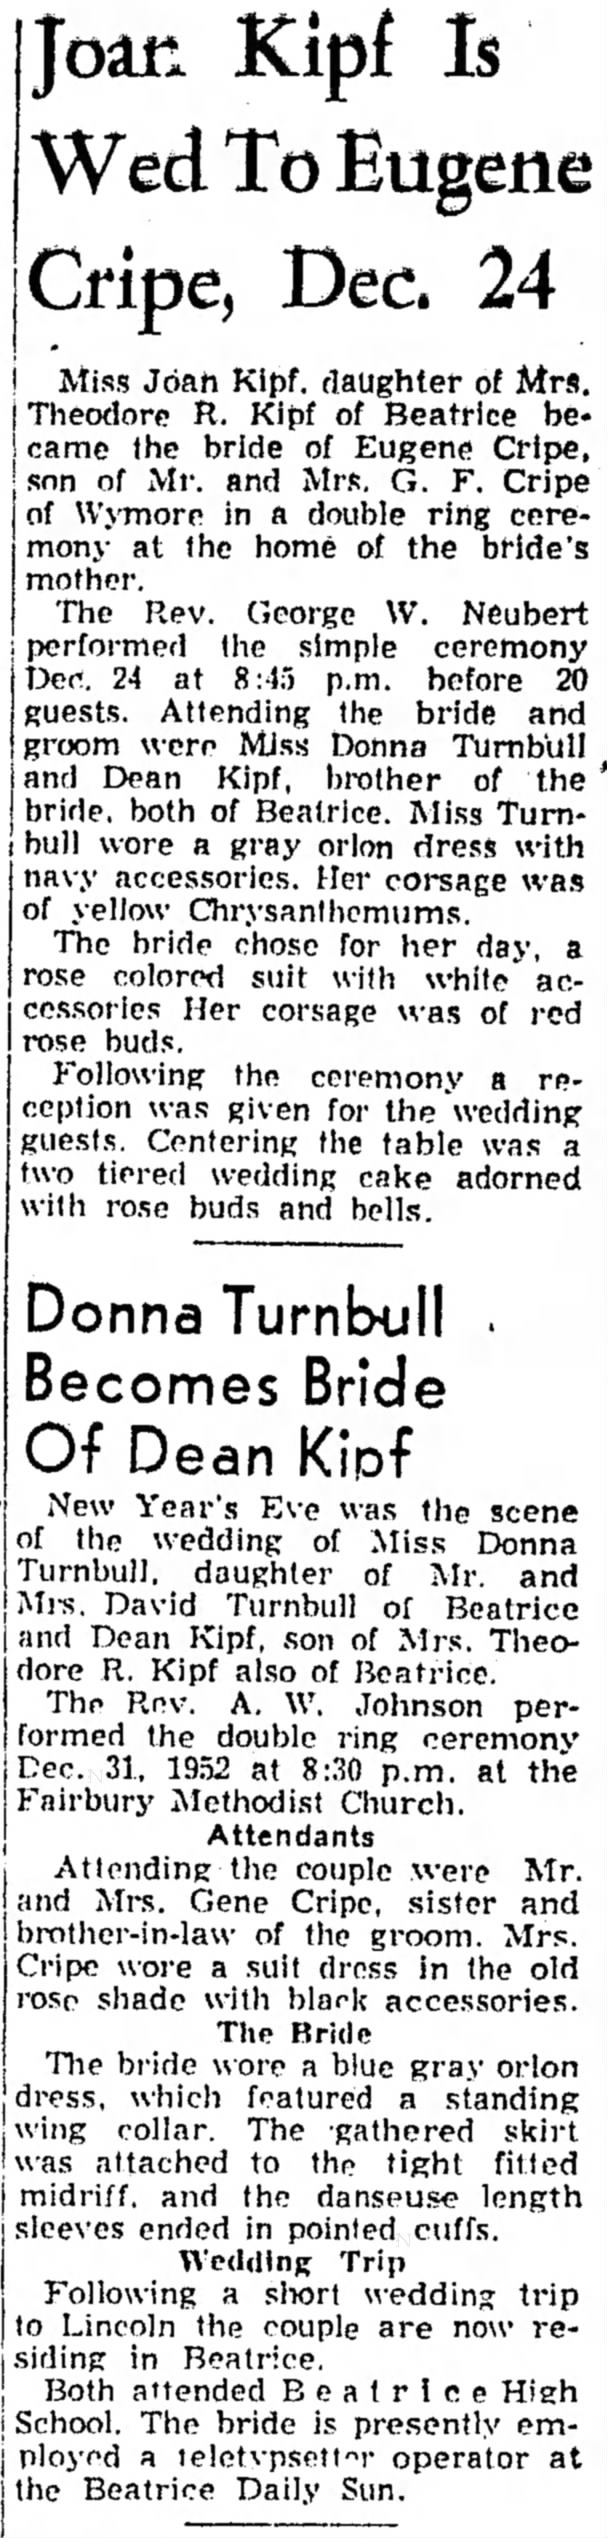 Donna Turnbull Kipf Wedding